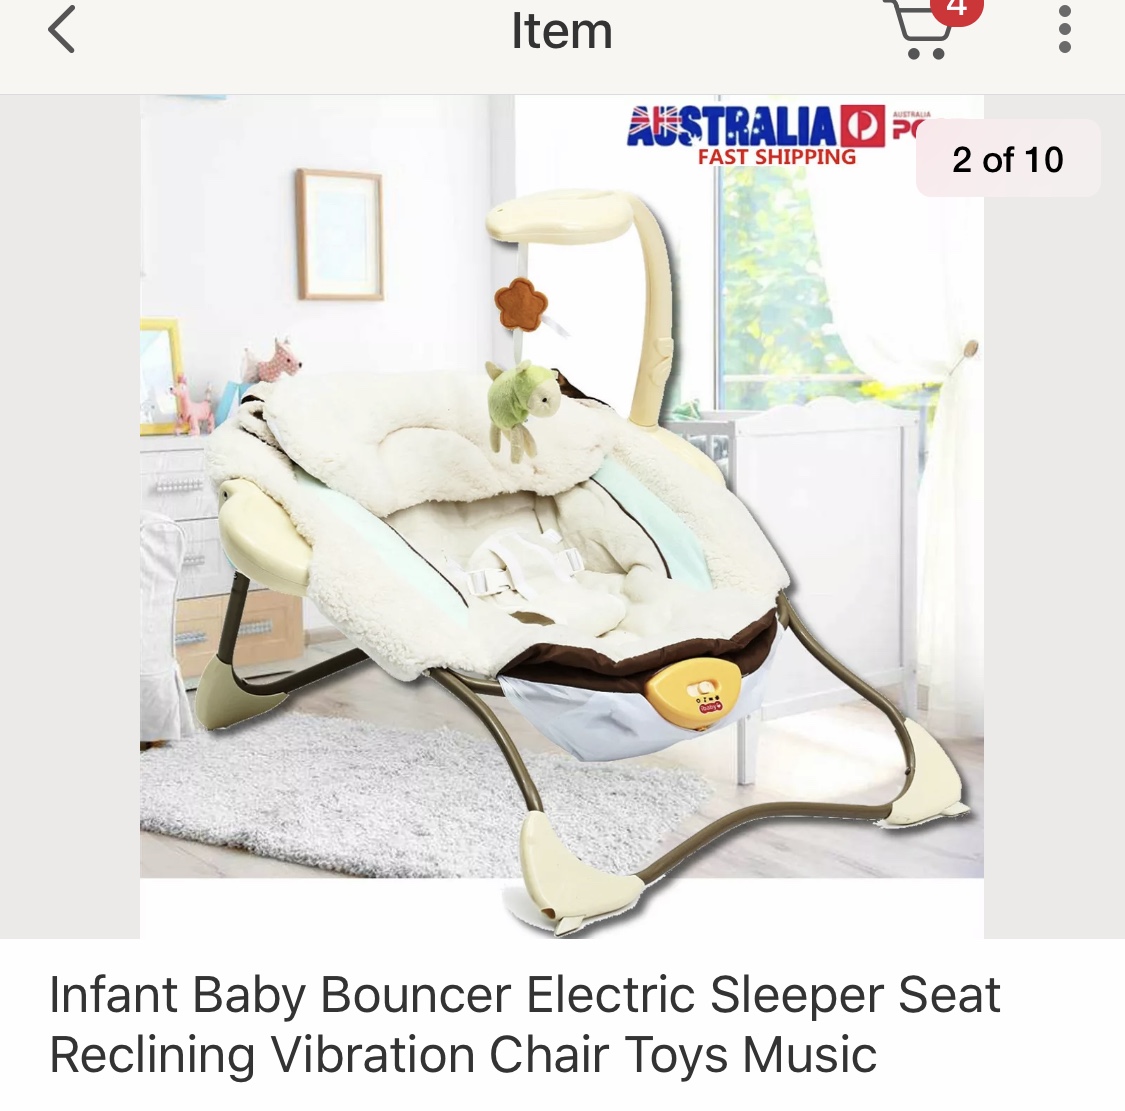 (*TAKEN) Infant baby bouncer electric sleeper seat